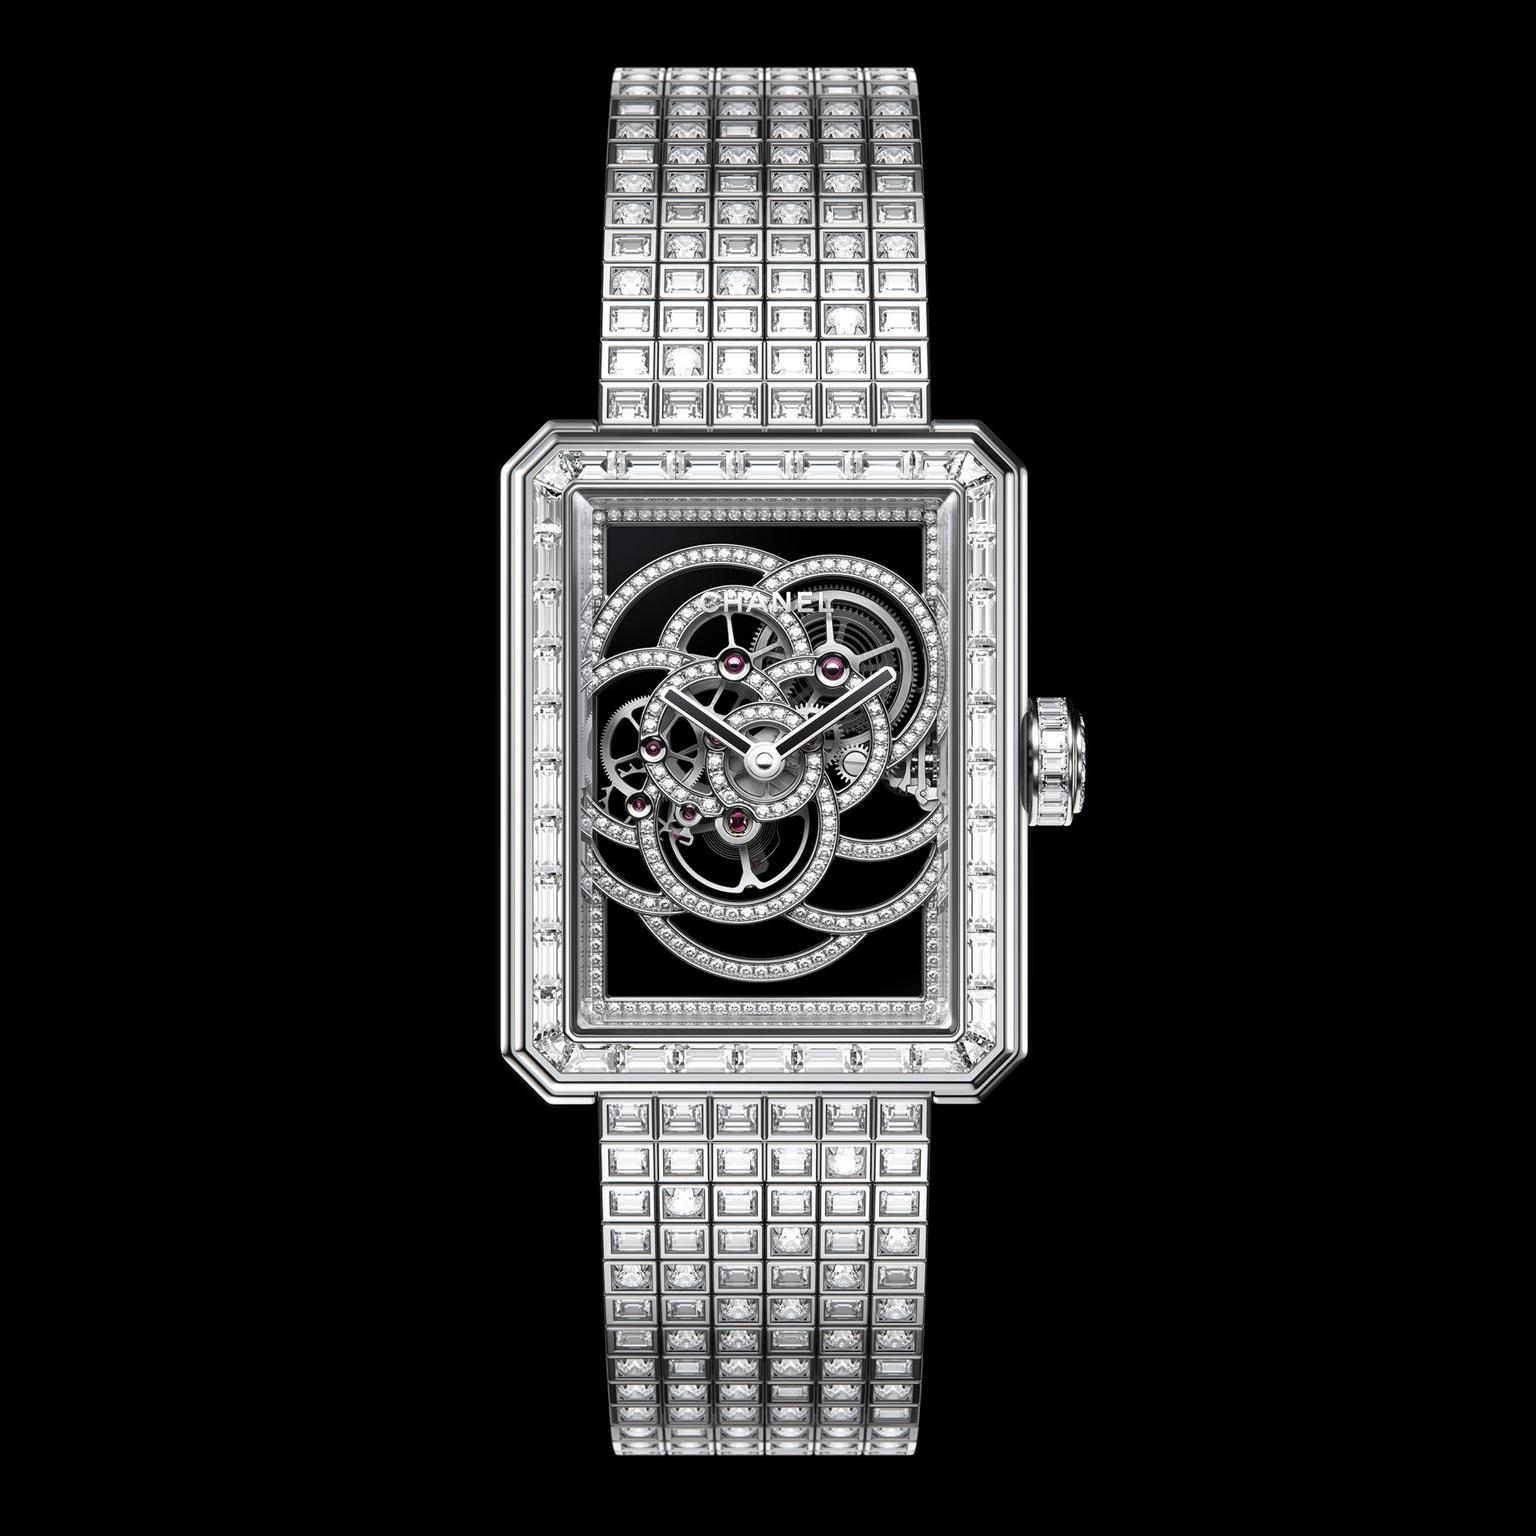 Chanel Première camellia skeleton watch